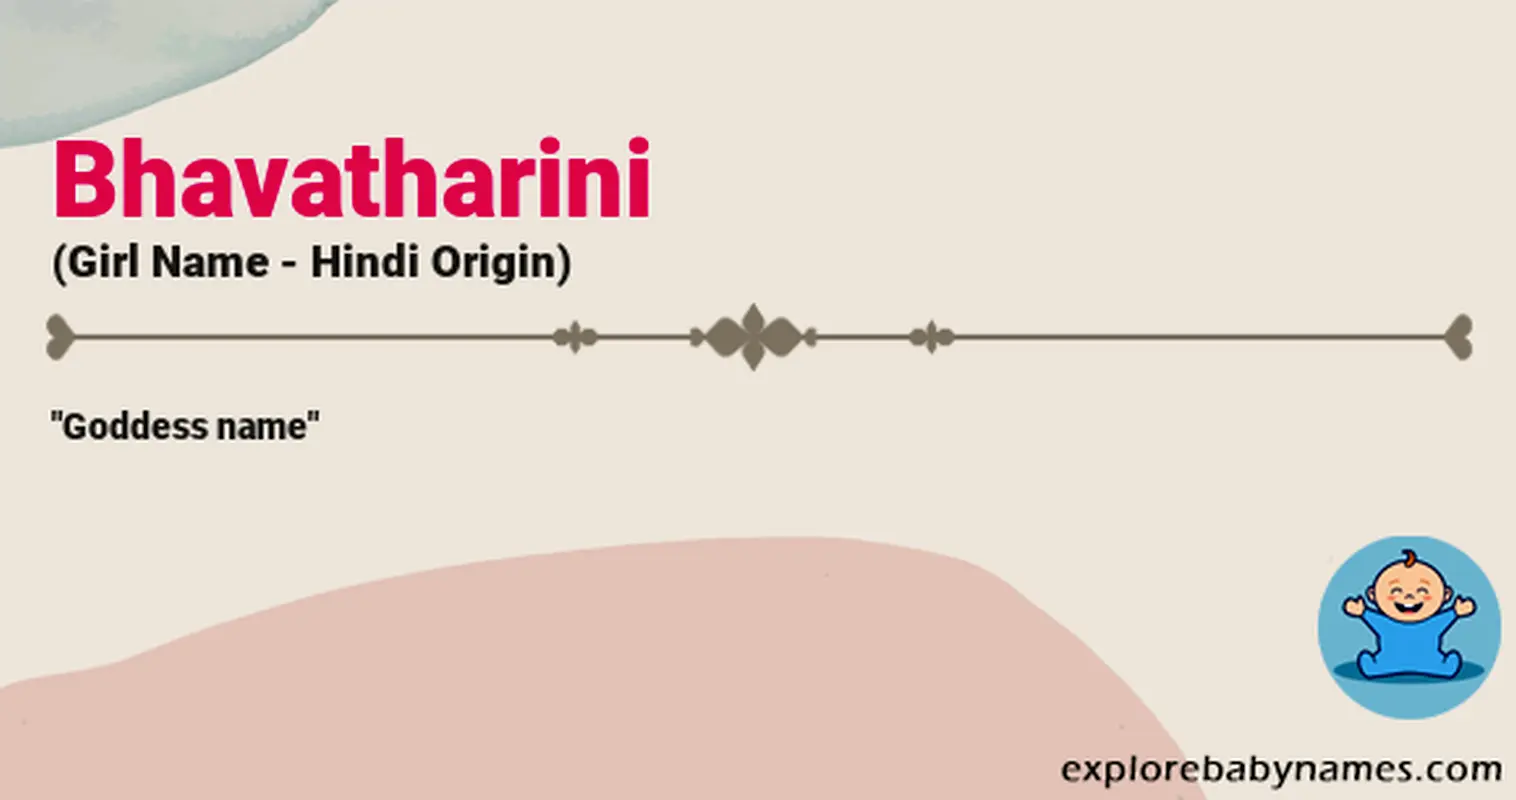 Meaning of Bhavatharini